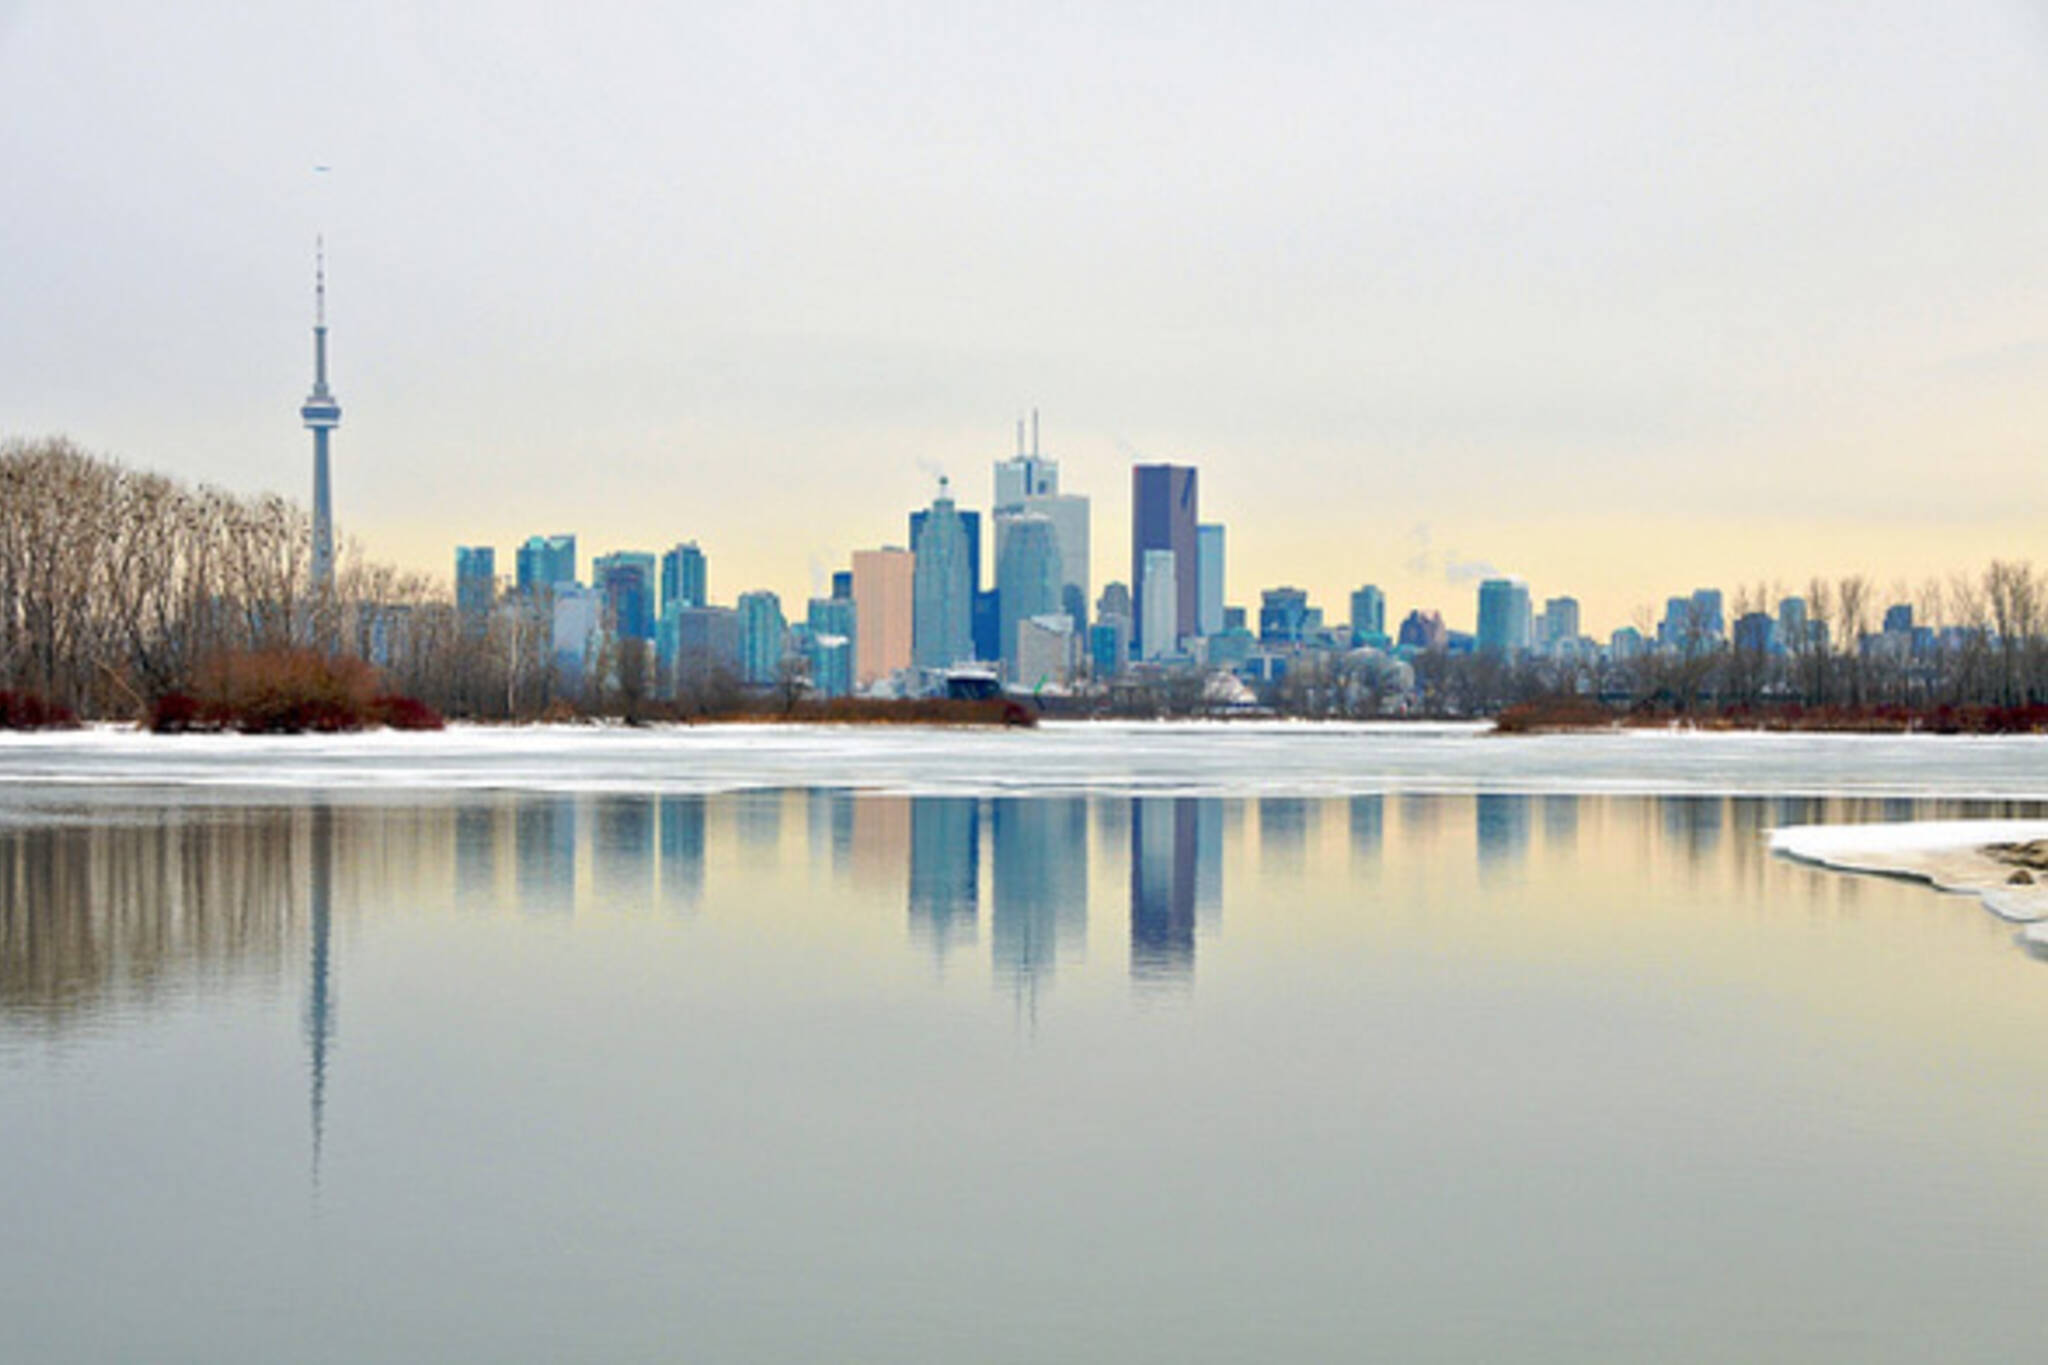 Toronto Ice